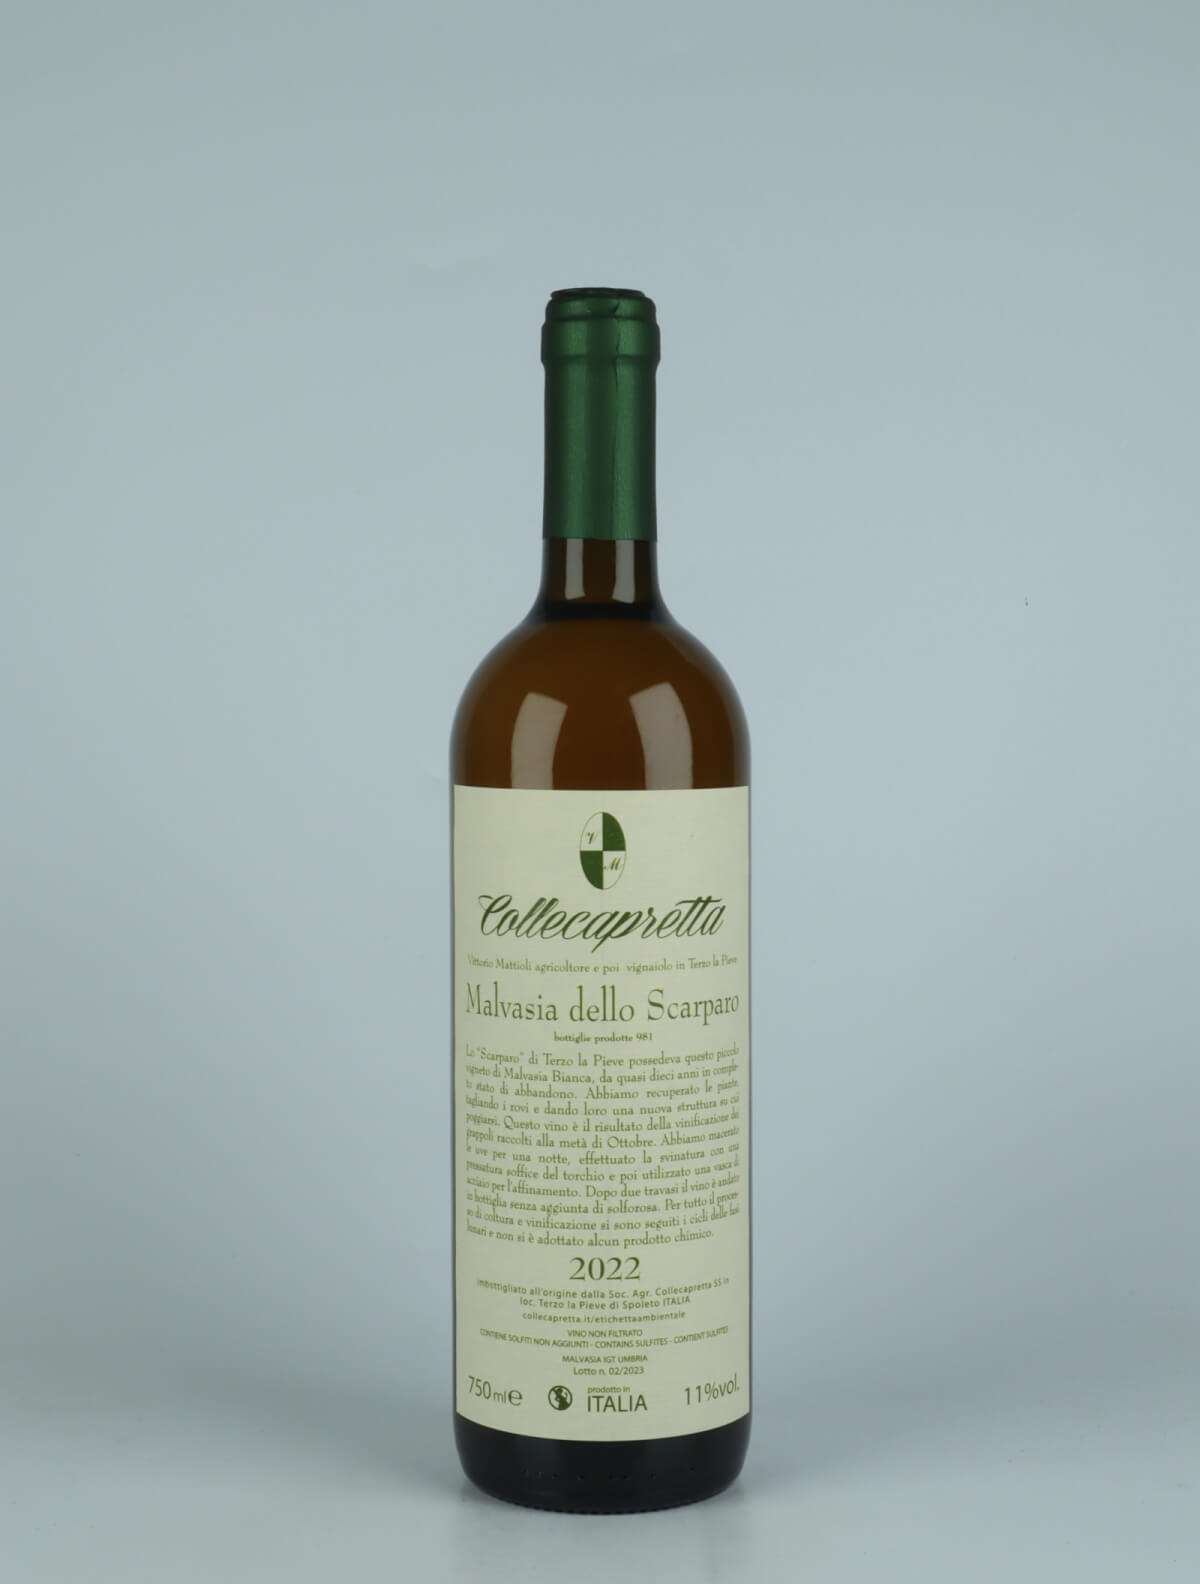 En flaske 2022 Malvasia dello Scarparo Orange vin fra Collecapretta, Umbrien i Italien